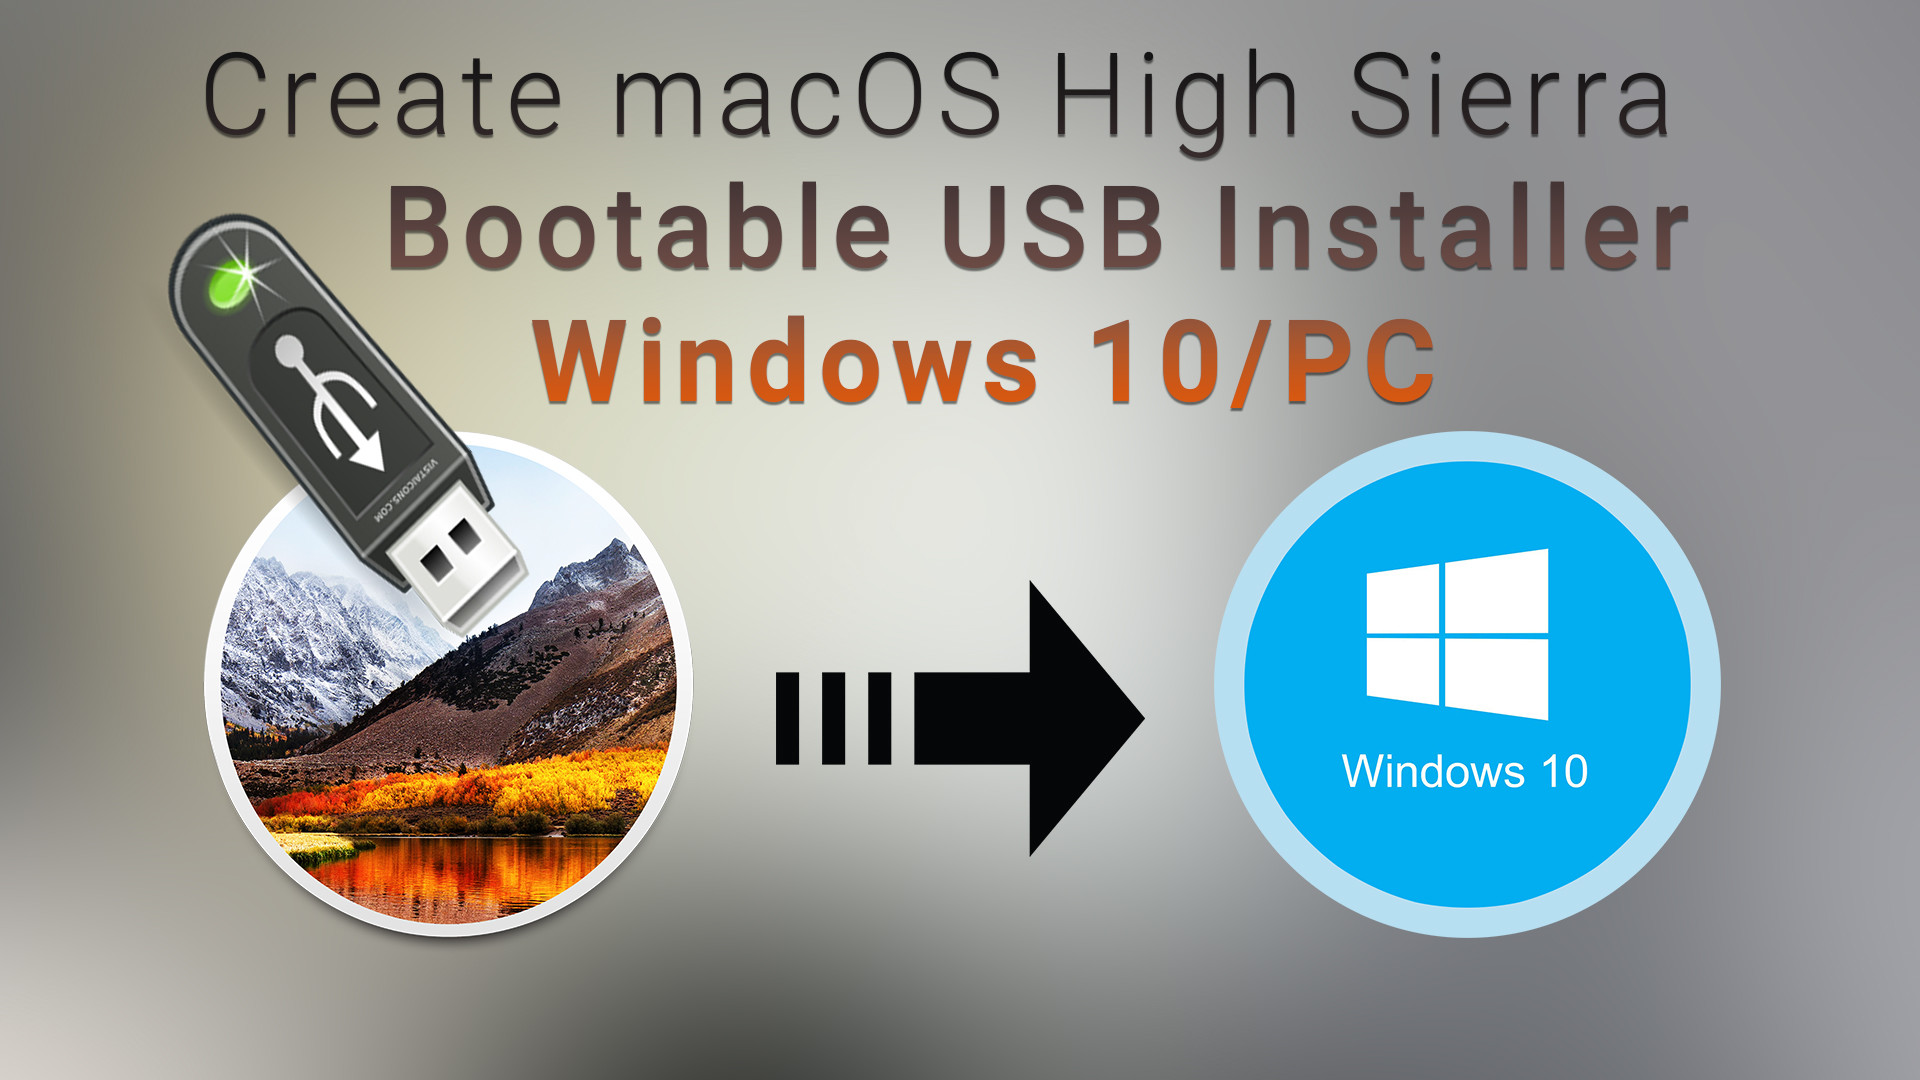 create a boot flash drive for mac os high sierra using windows 10 and dmg file